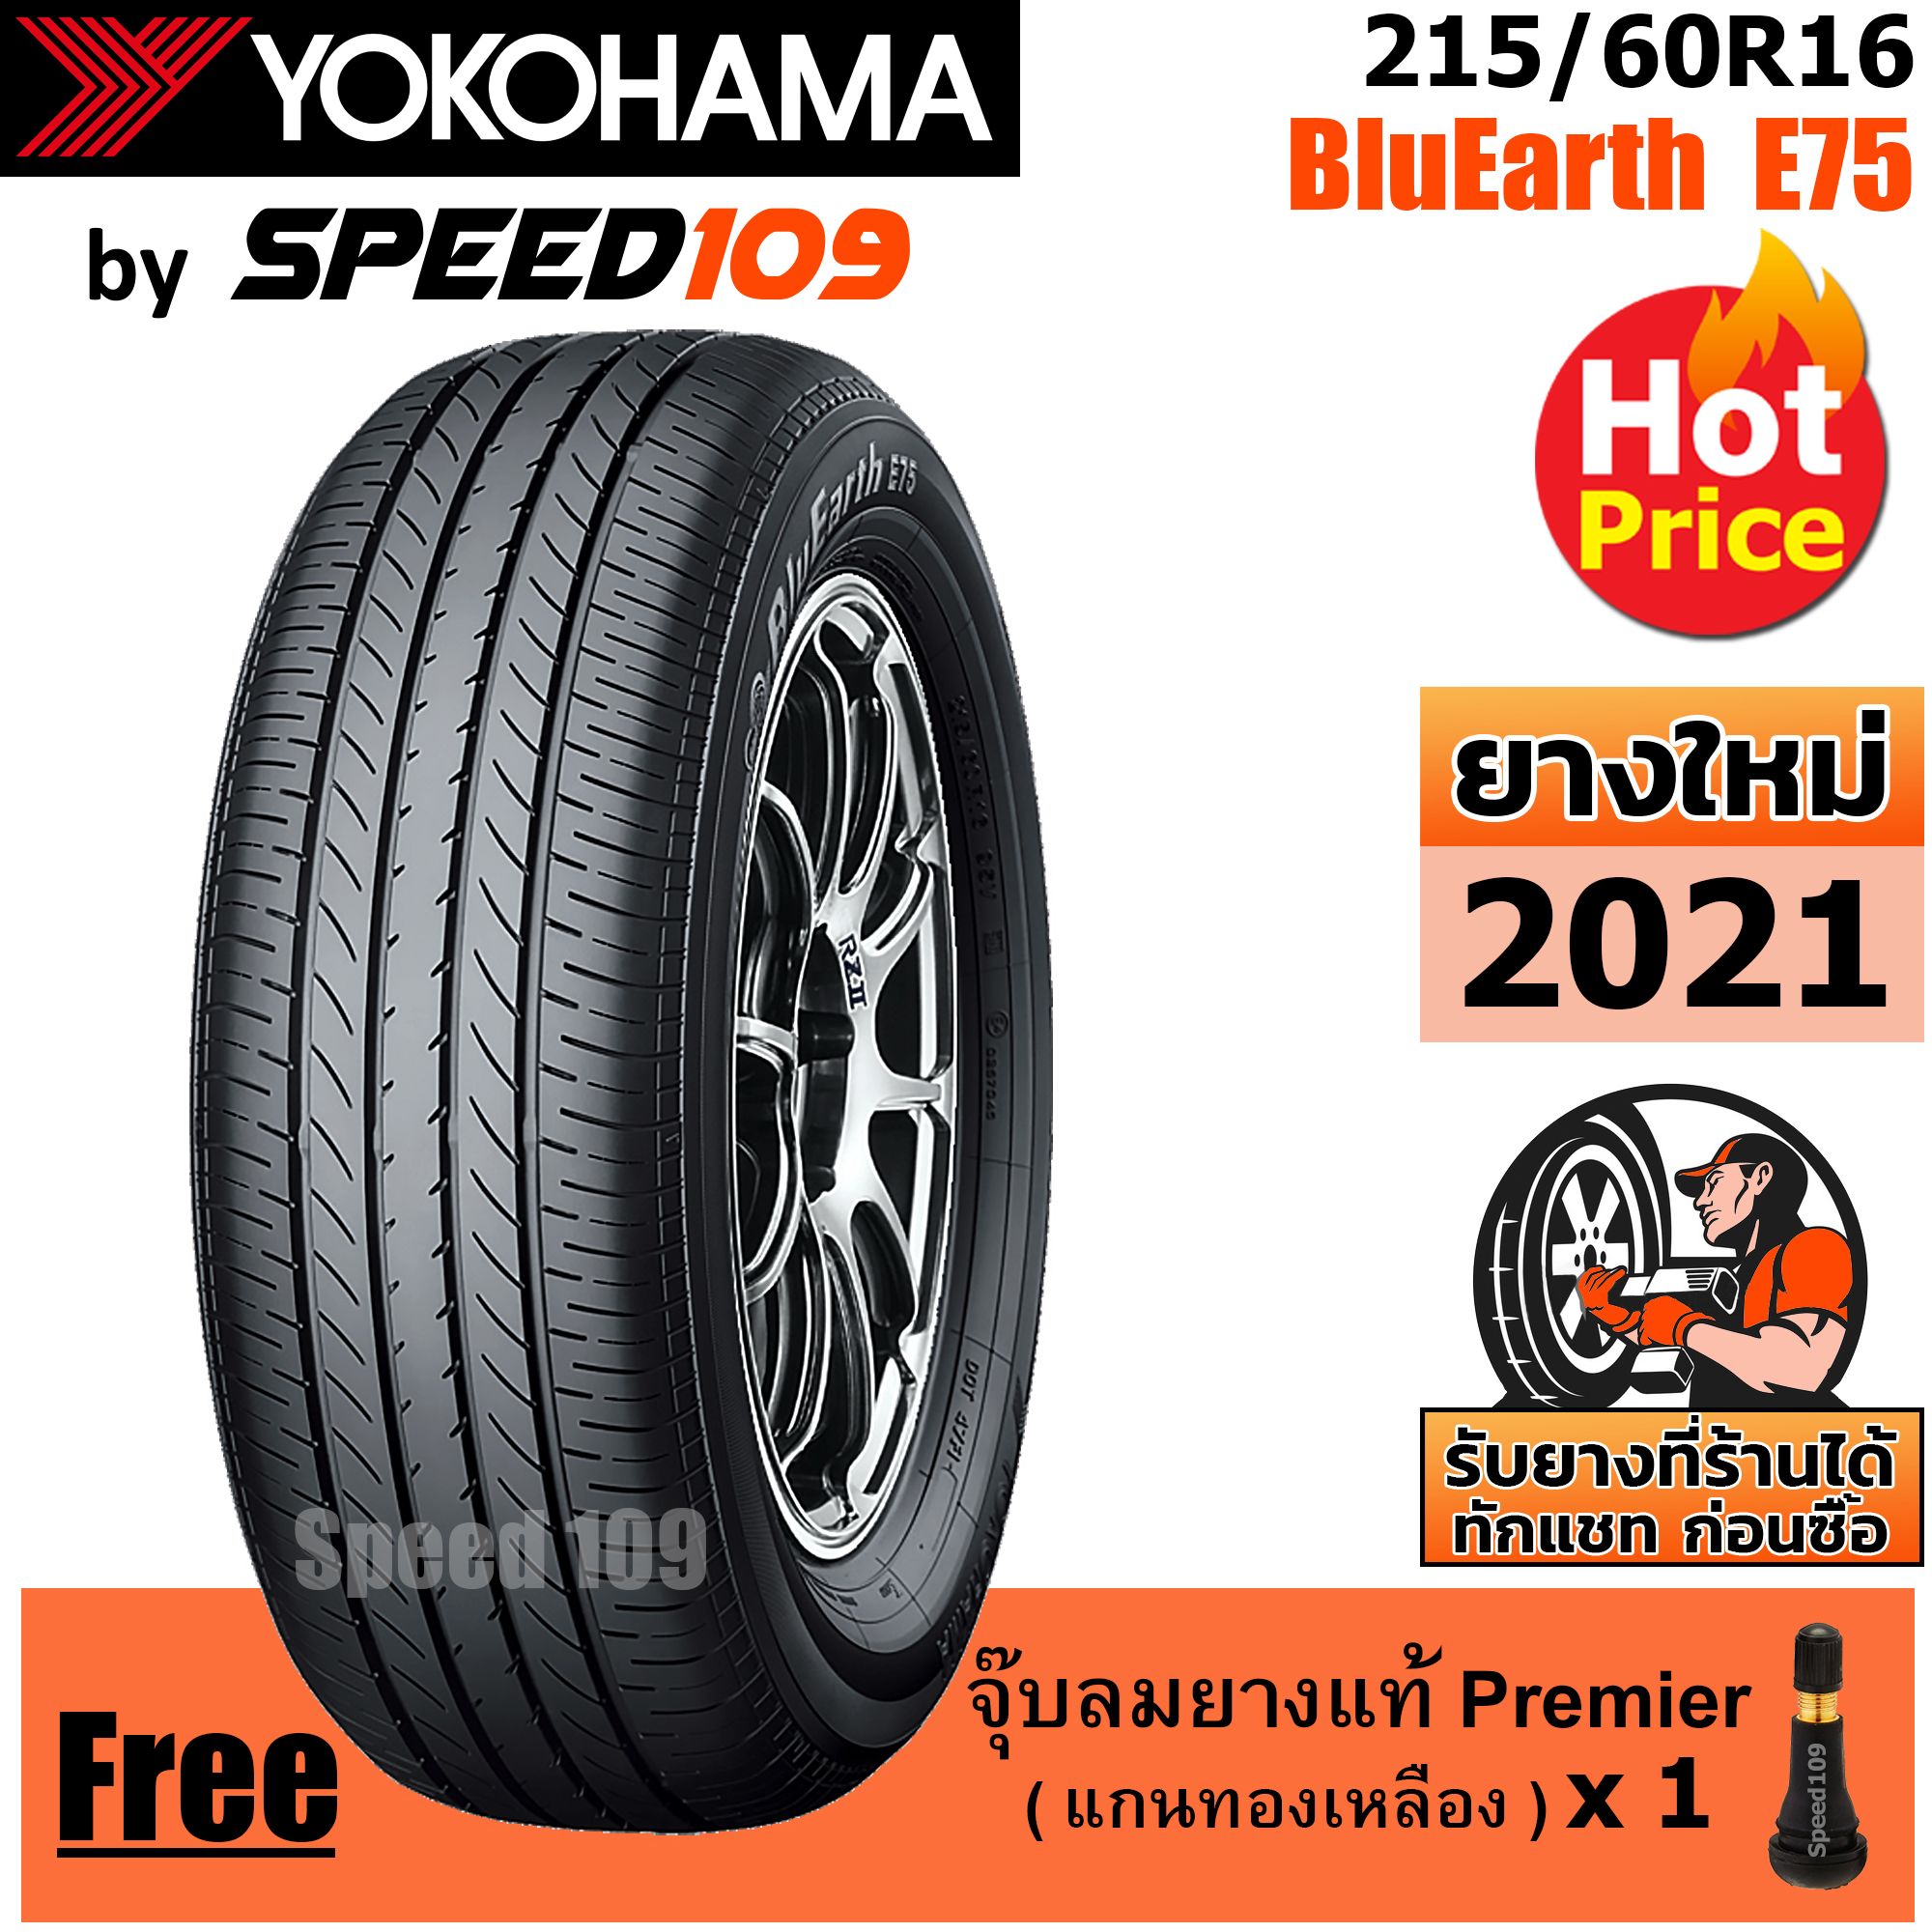 YOKOHAMA ยางรถยนต์ ขอบ 16 ขนาด 215/60R16 รุ่น BluEarth E75 - 1 เส้น (ปี 2021)